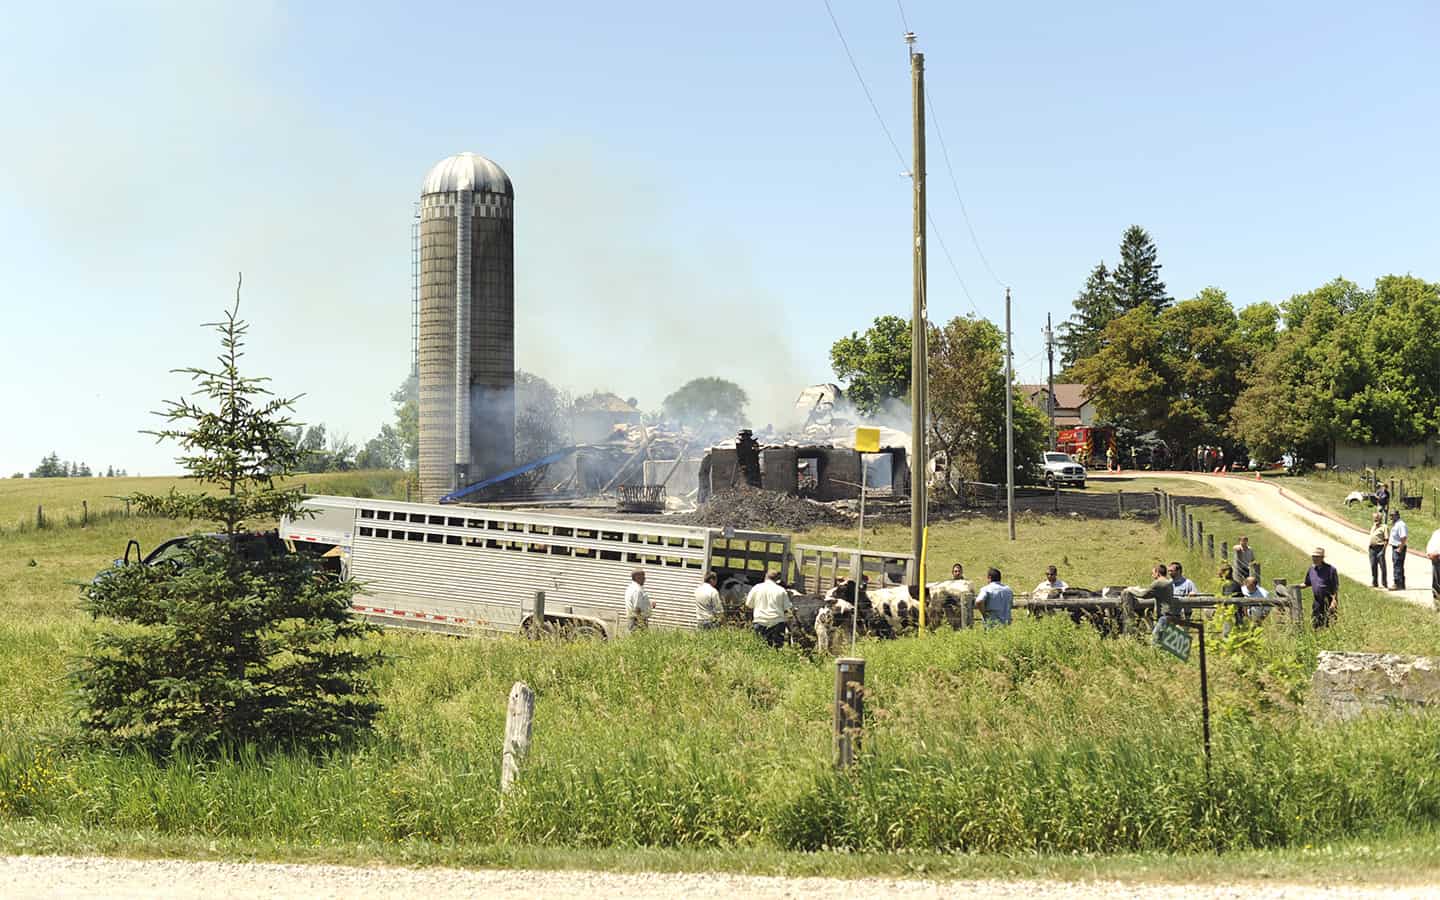                      Fire destroys Wellesley barn                             
                     